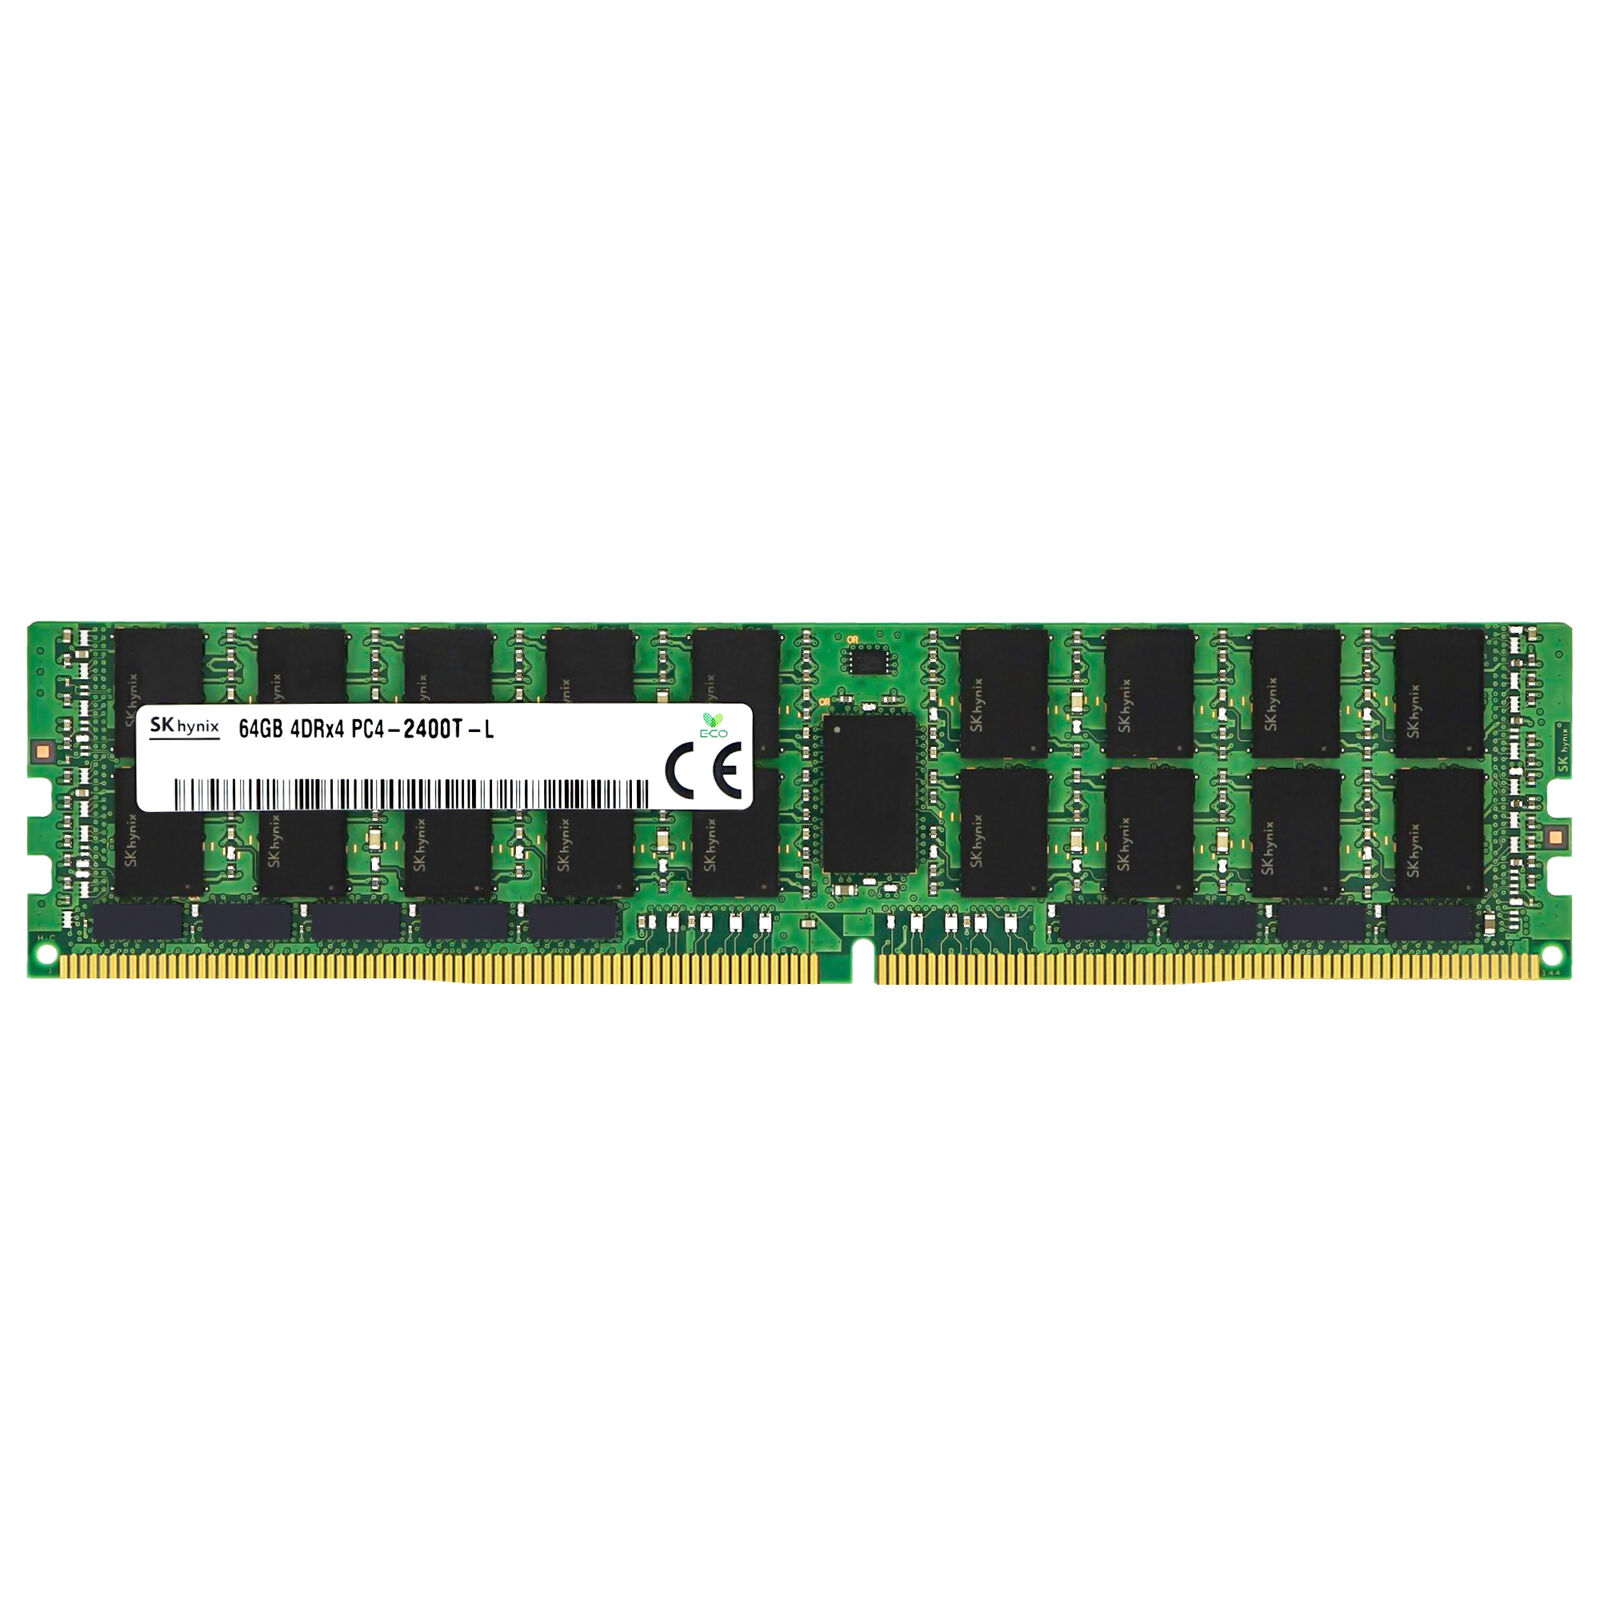 Hynix 64GB 4DRx4 PC4-2400T LRDIMM DDR4-19200 ECC Load Reduced Server Memory RAM